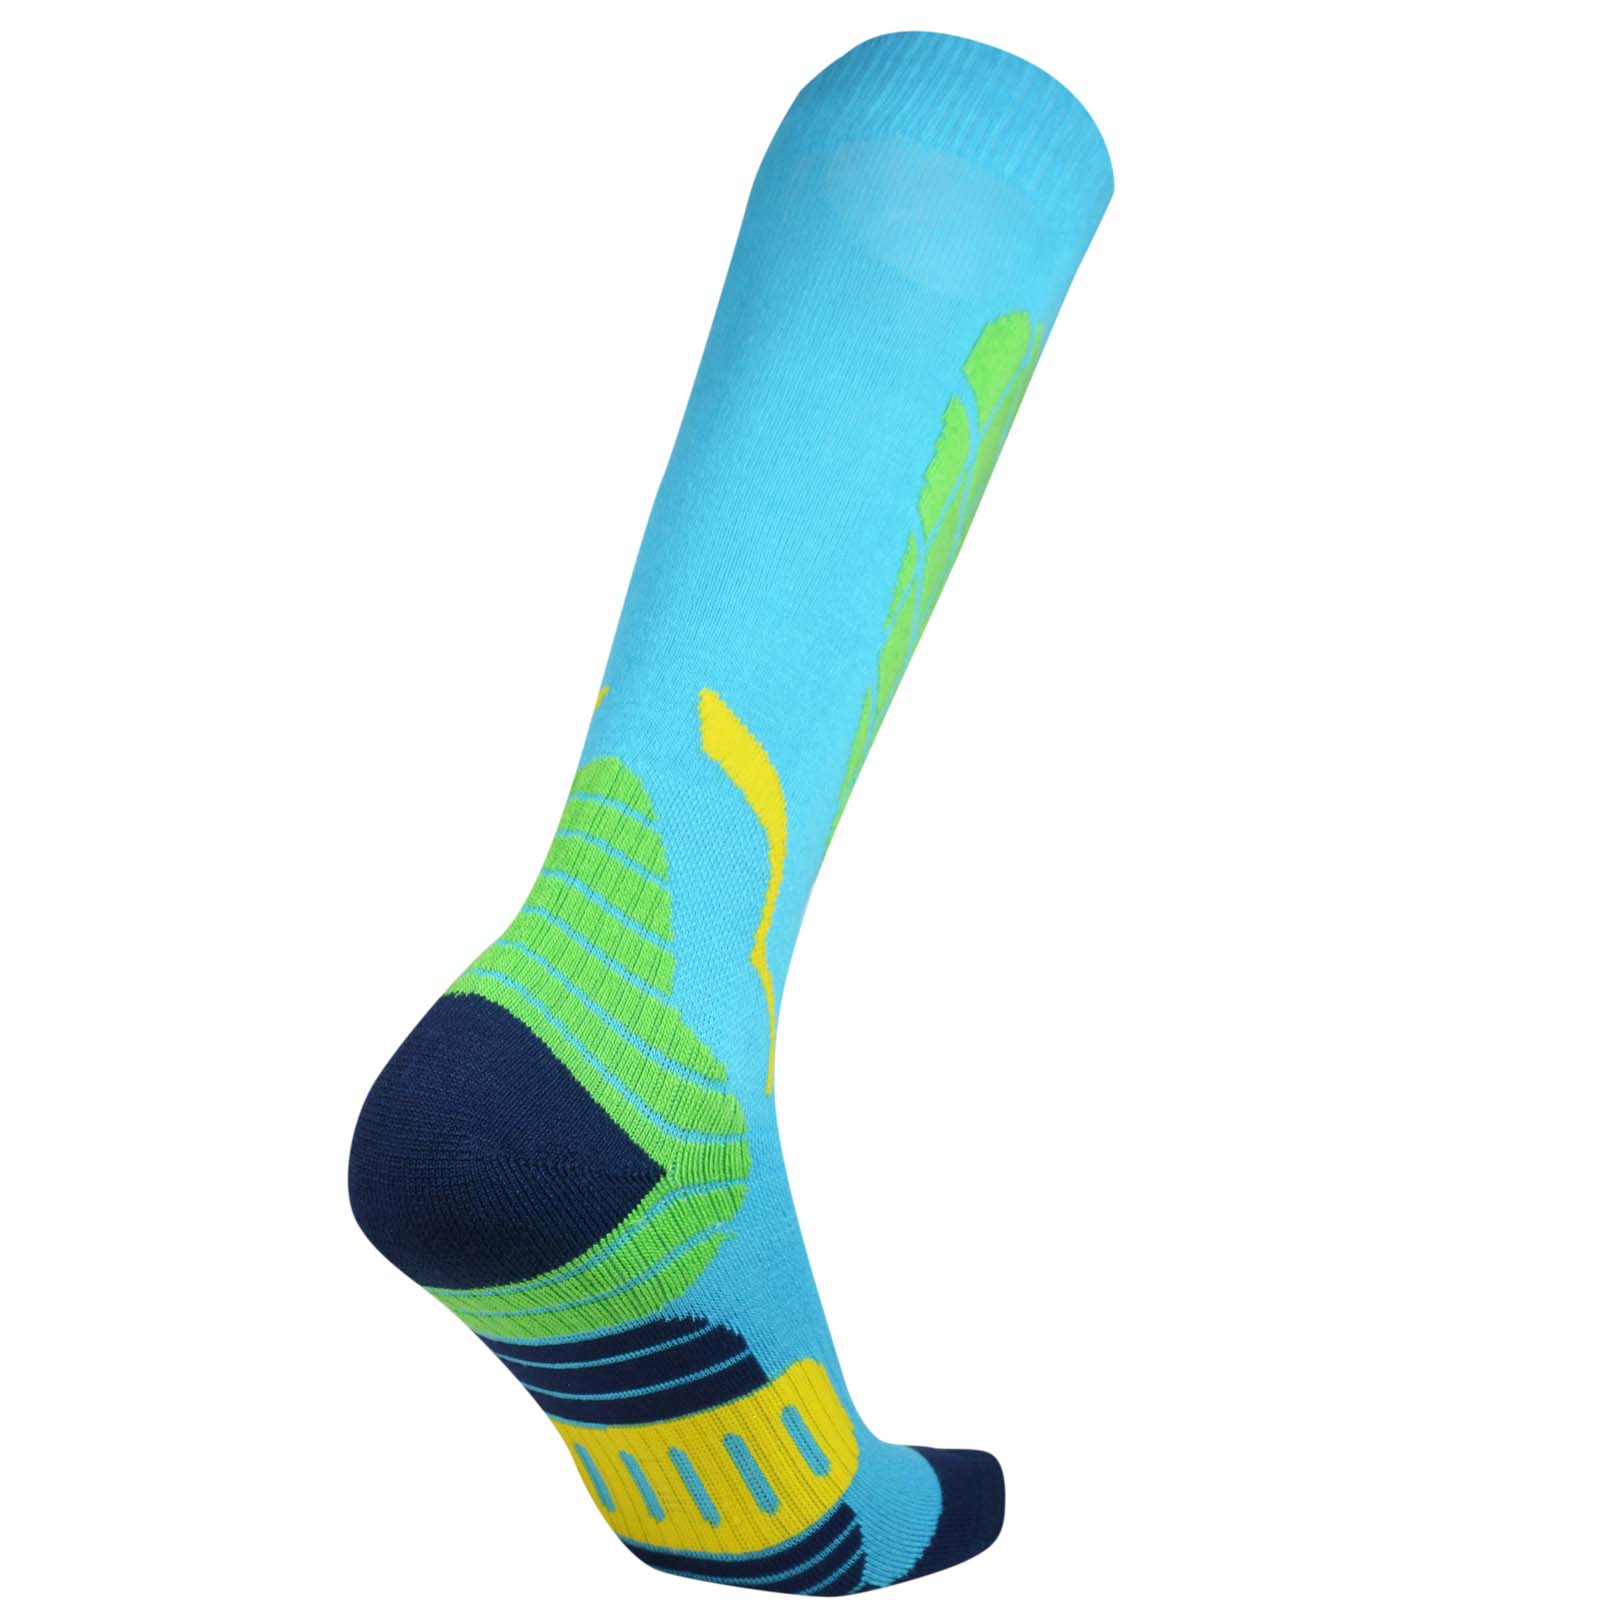 Midweight Warm Ski Socks | Danken Enterprise